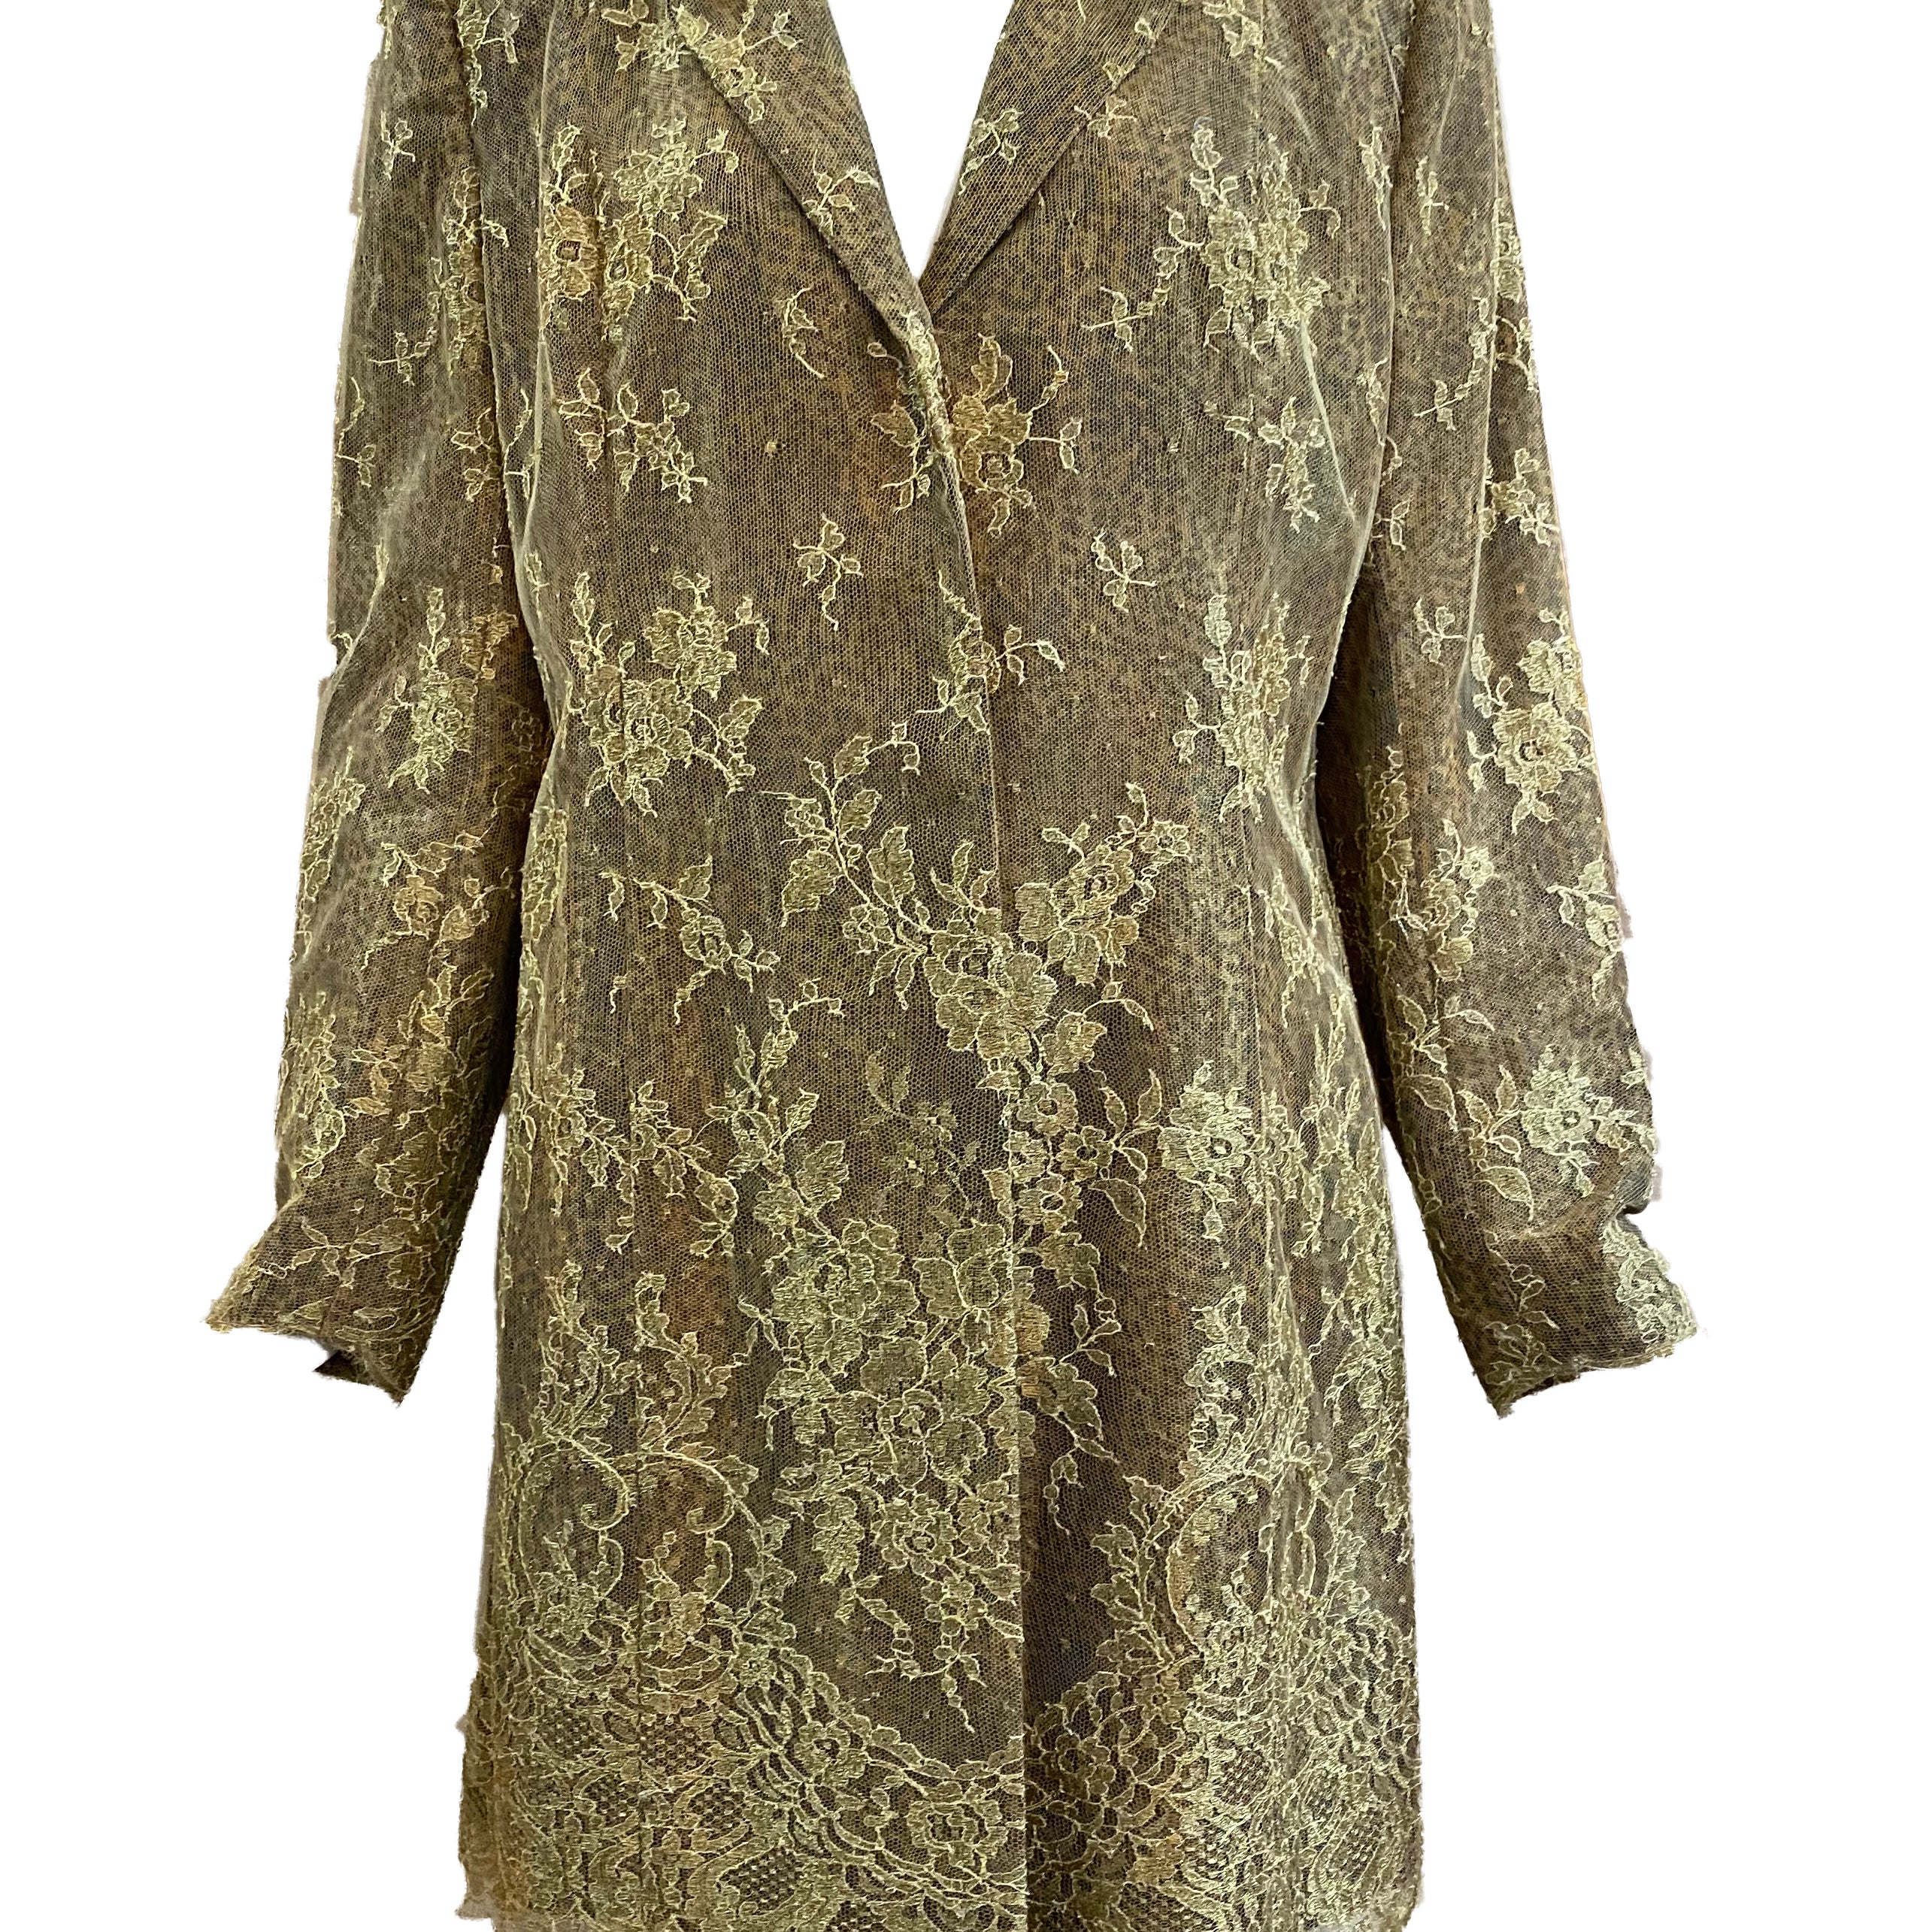 Jean-Louis Scherrer Gold Lace Evening Coat with Leopard Print Underlay FRONT 1 of 4